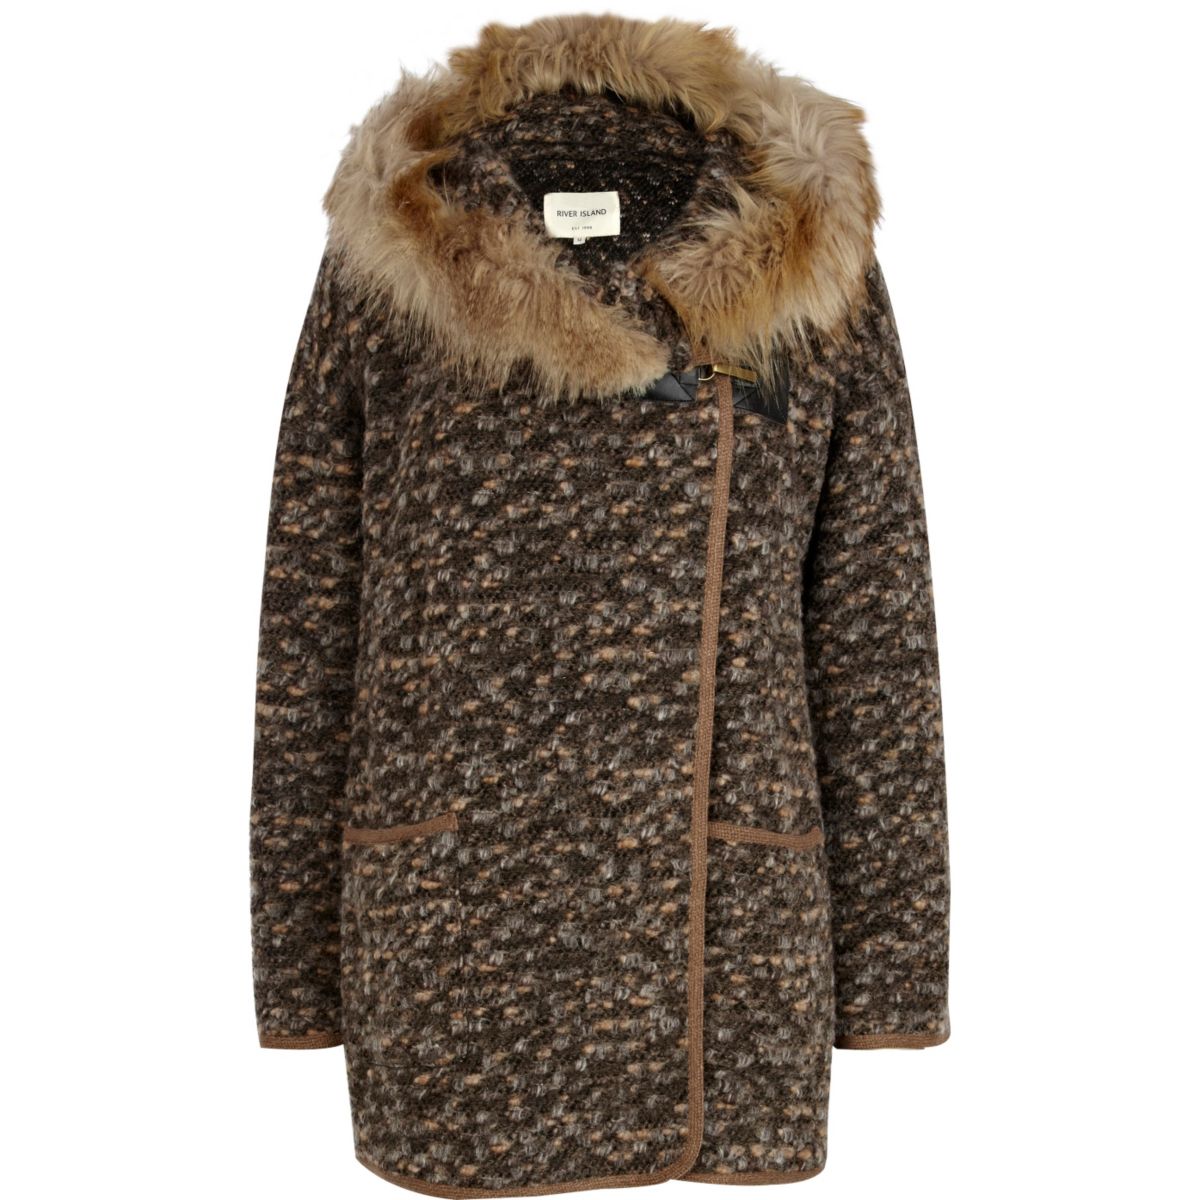 Brown faux fur hooded coatigan - Coats & Jackets - Sale - women